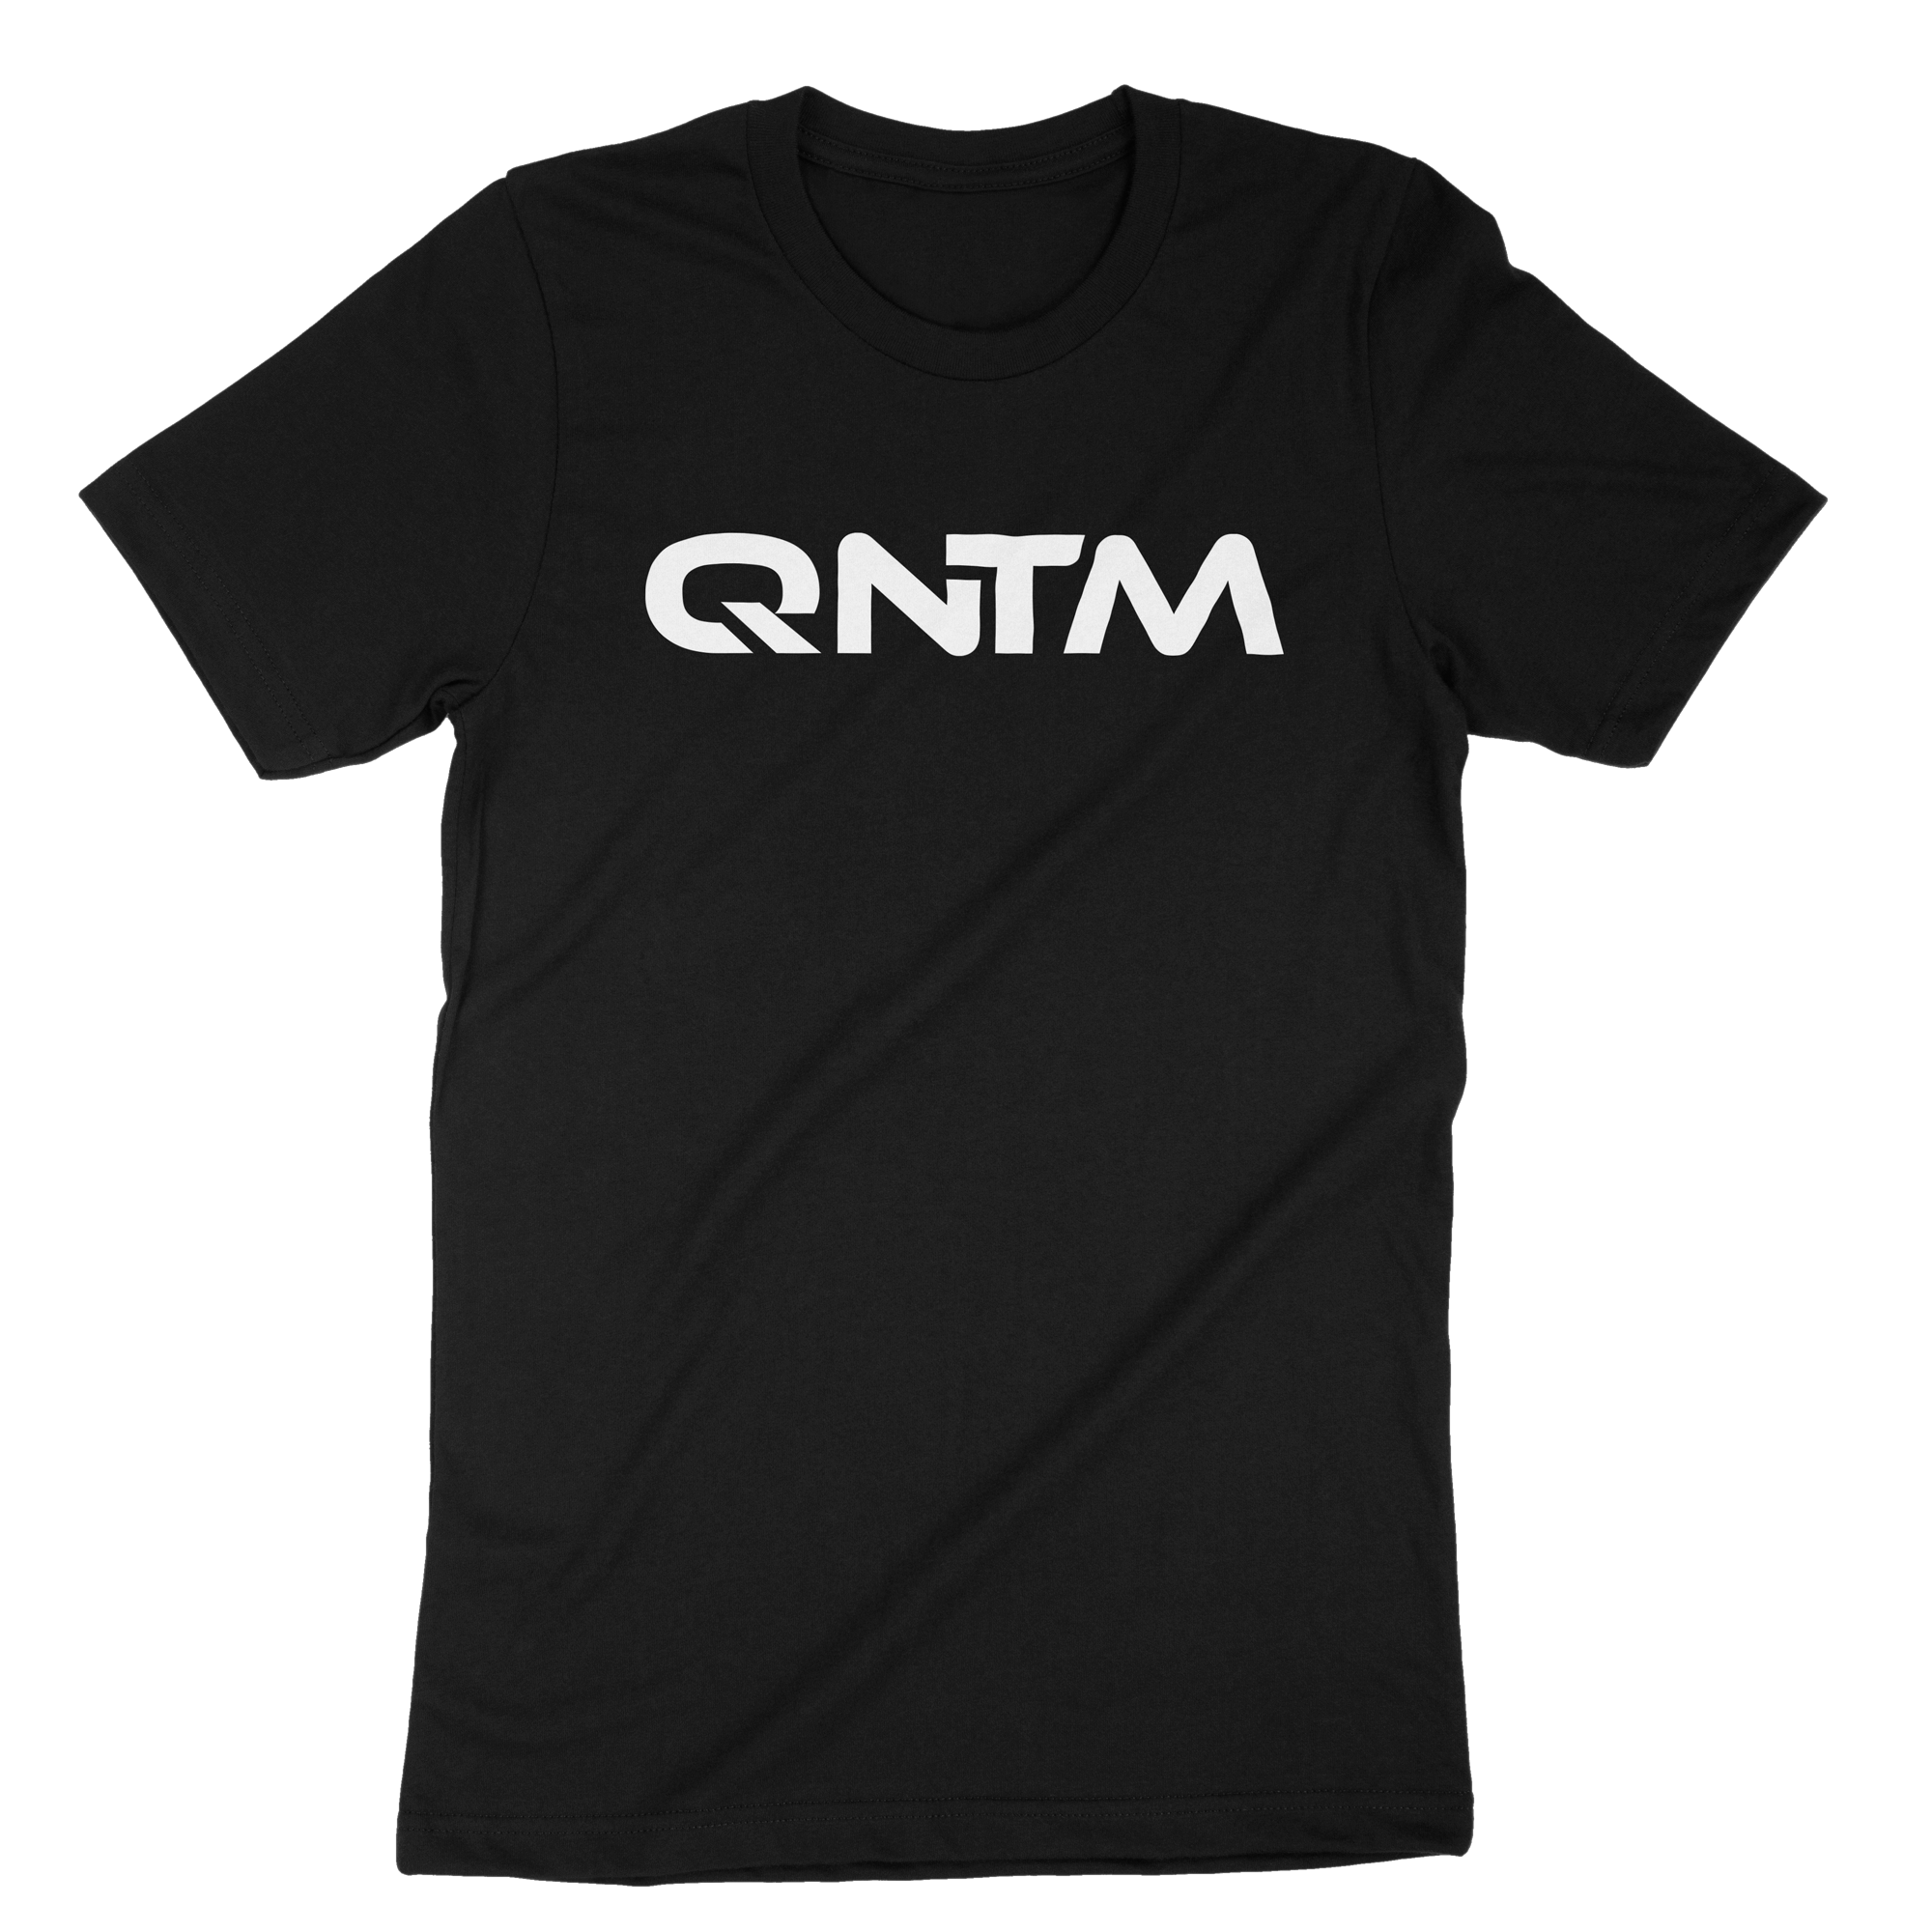 QNTM Logo T-Shirt